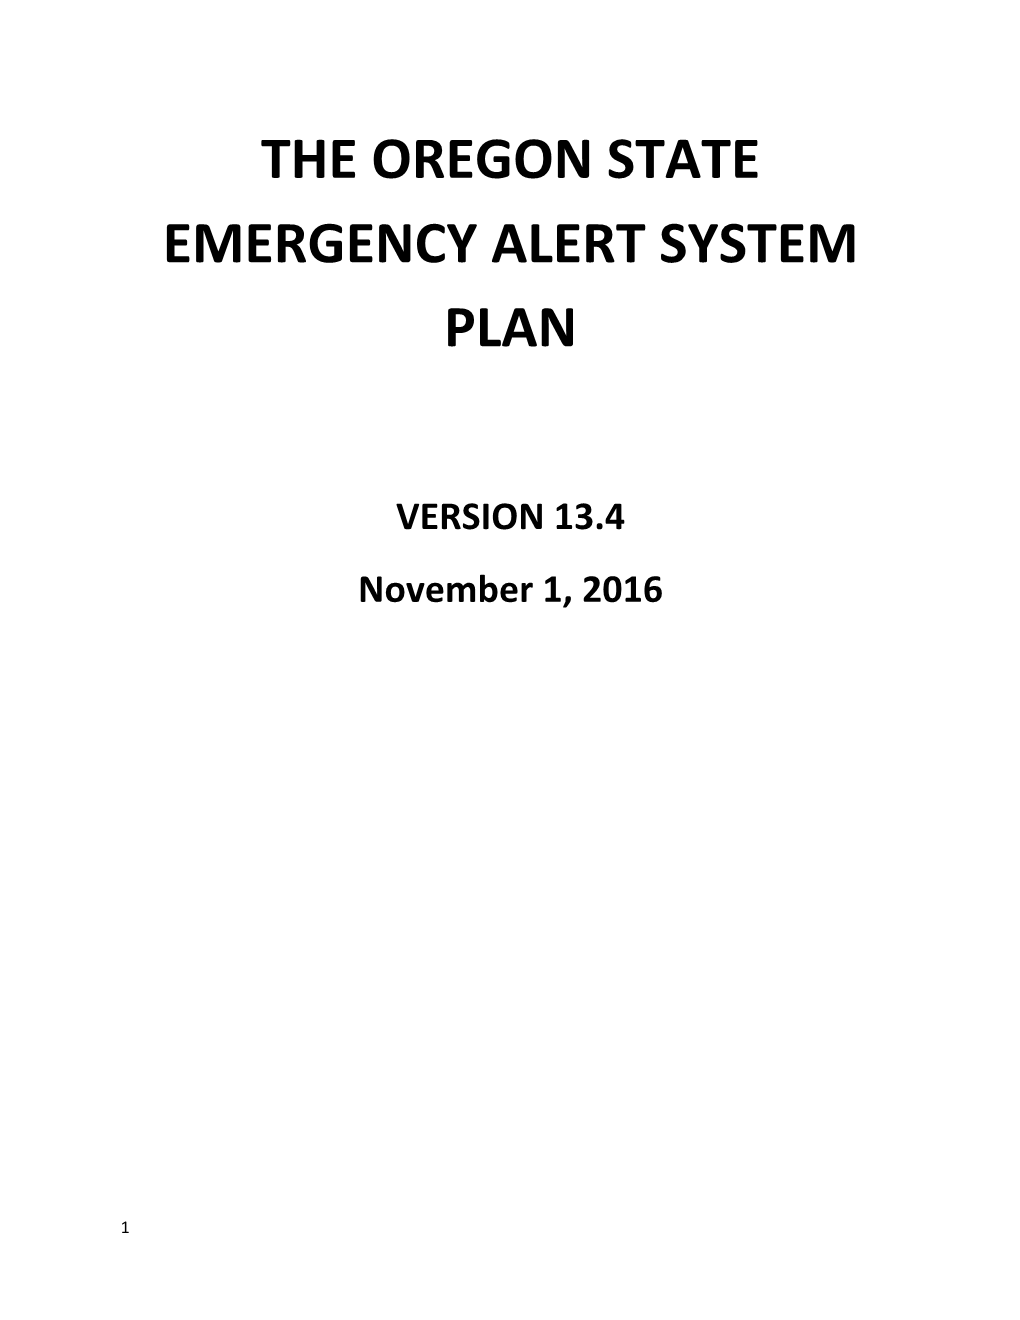 Oregon State EAS Plan Version 13.4 Updated 11-1-16